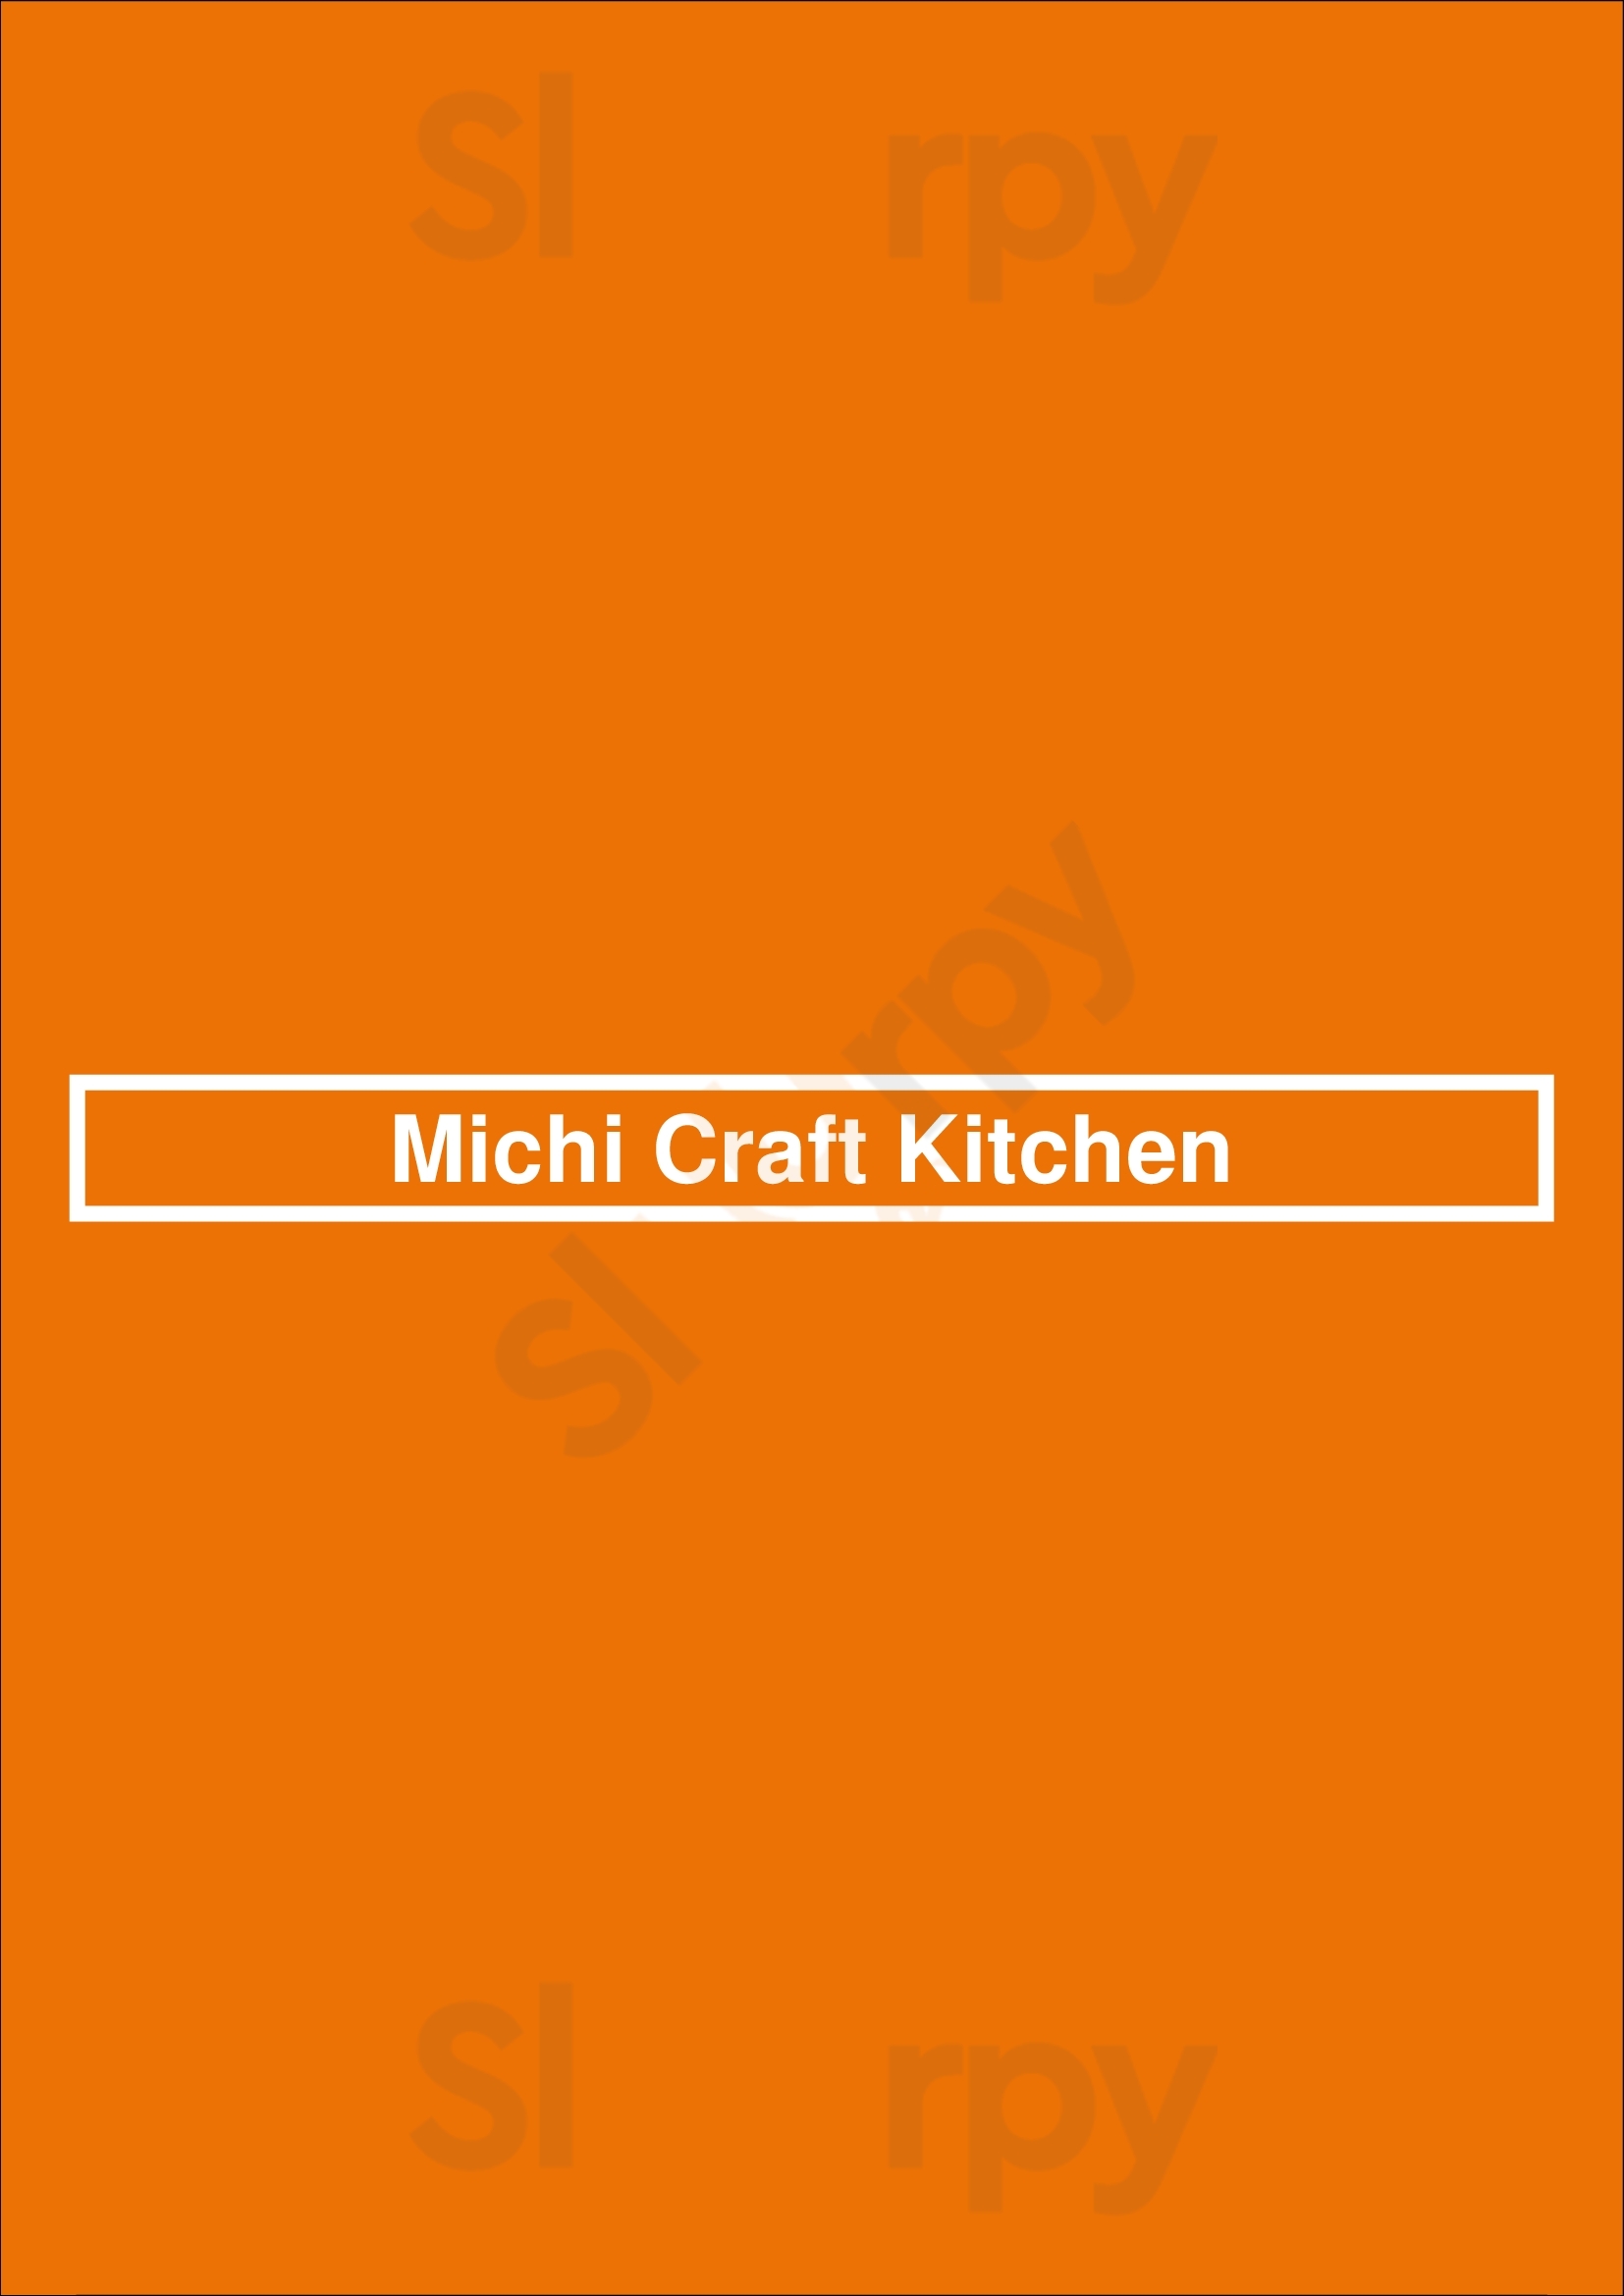 Michi Craft Kitchen Vancouver Menu - 1